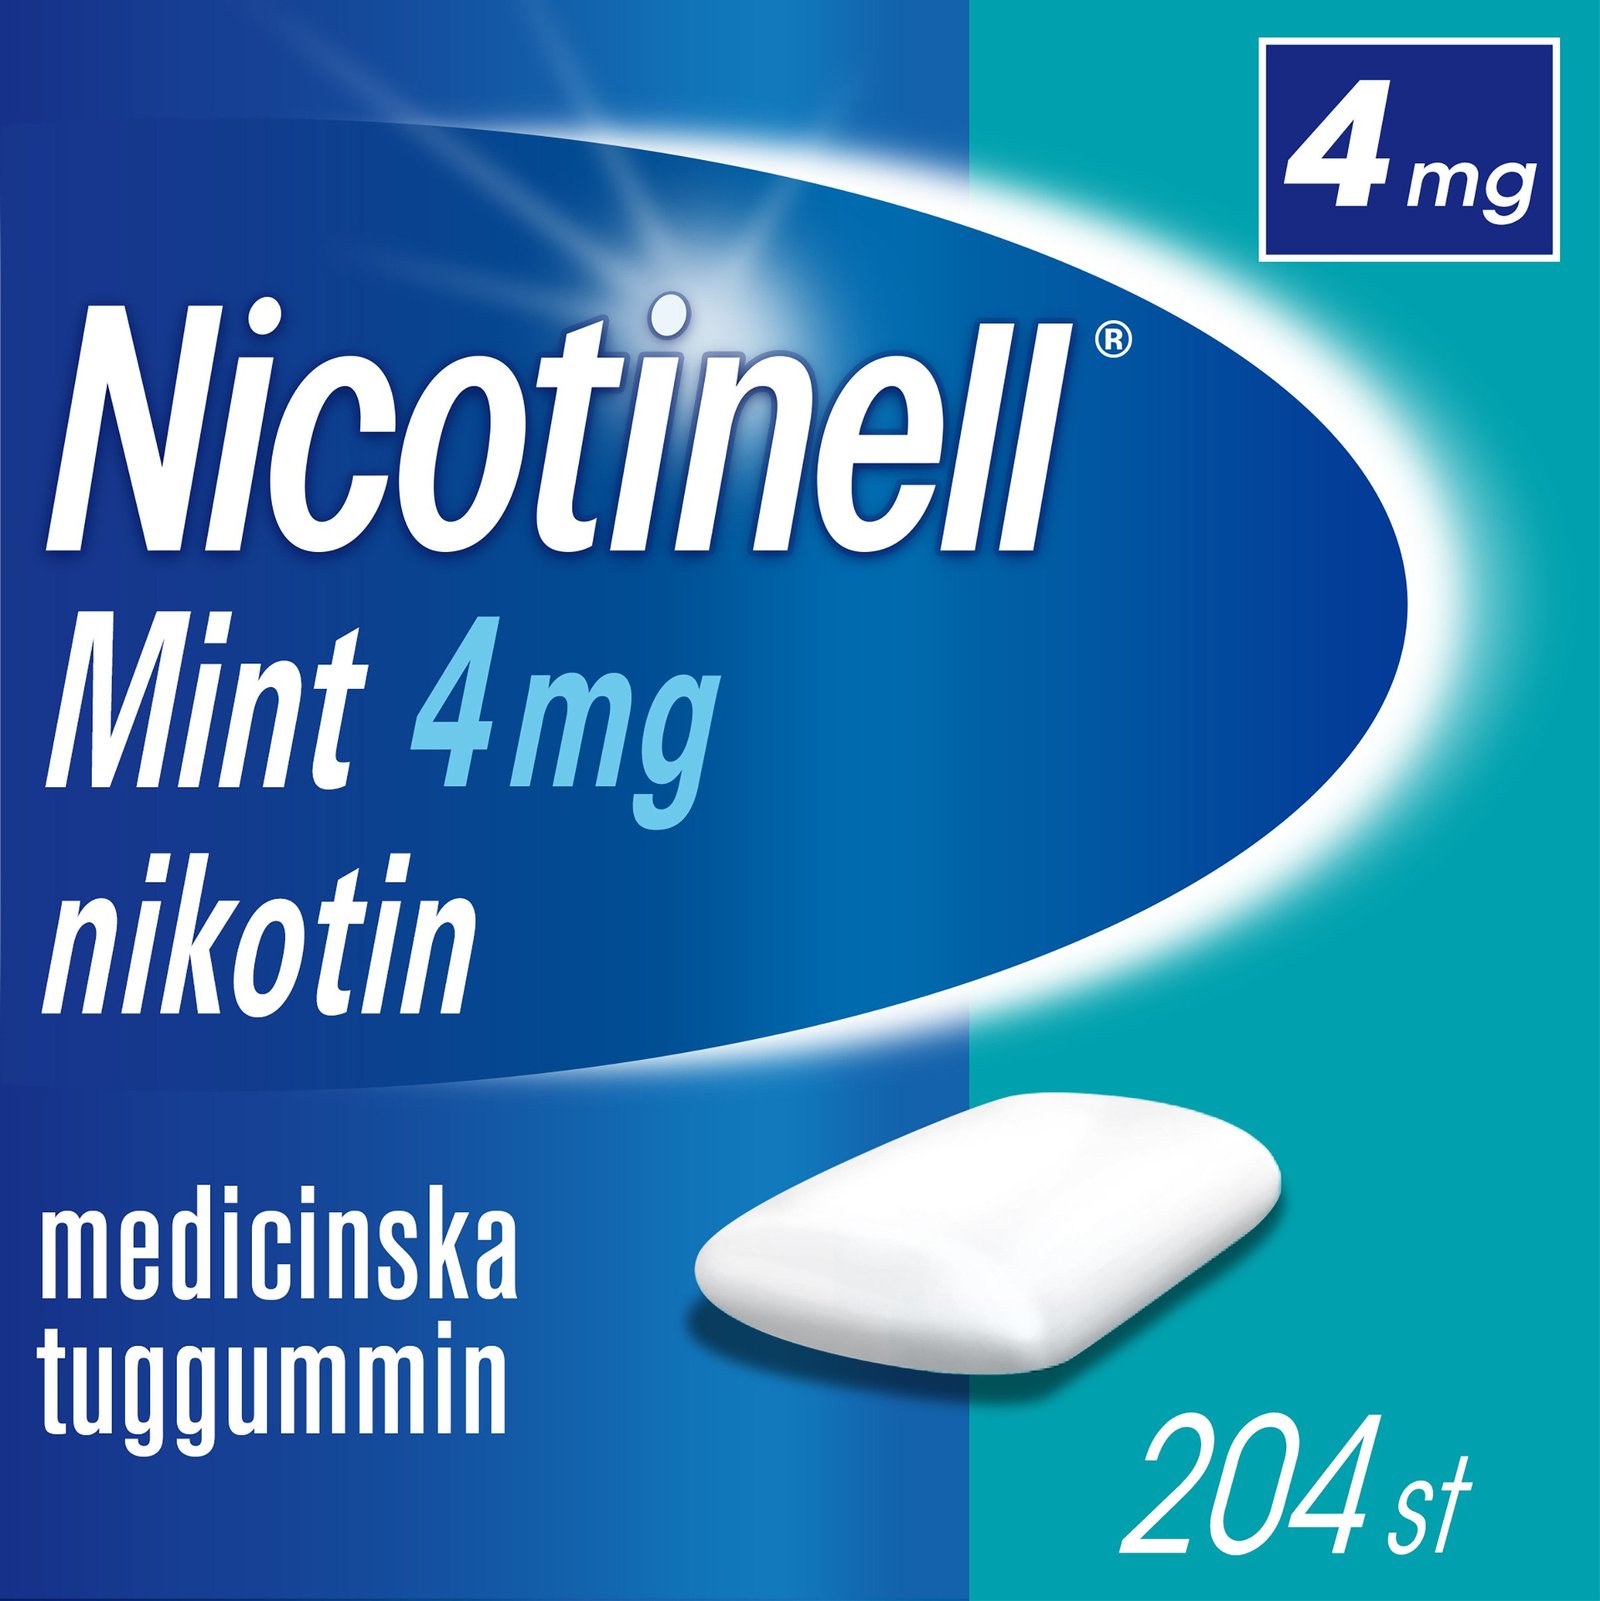 Nicotinell Mint 4mg Nikotin Medicinska tuggummin 204 st